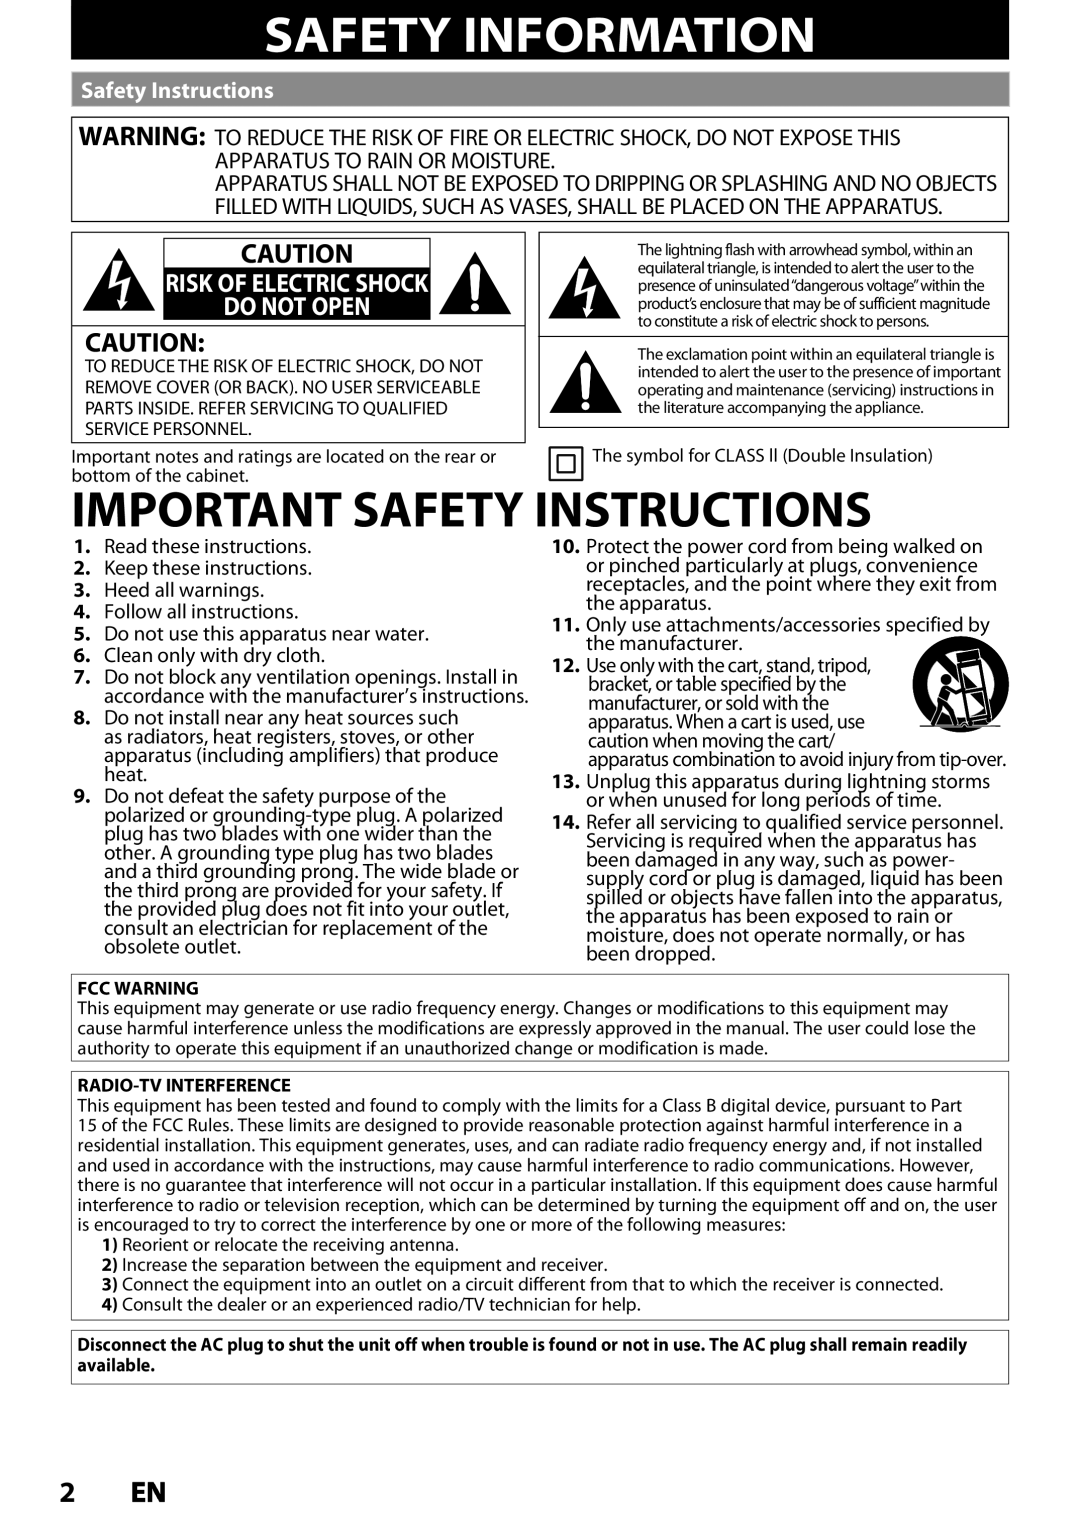 Magnavox MDR537H, MDR533H Safety Information, 2 EN, Important Safety Instructions, Risk Of Electric Shock Do Not Open 